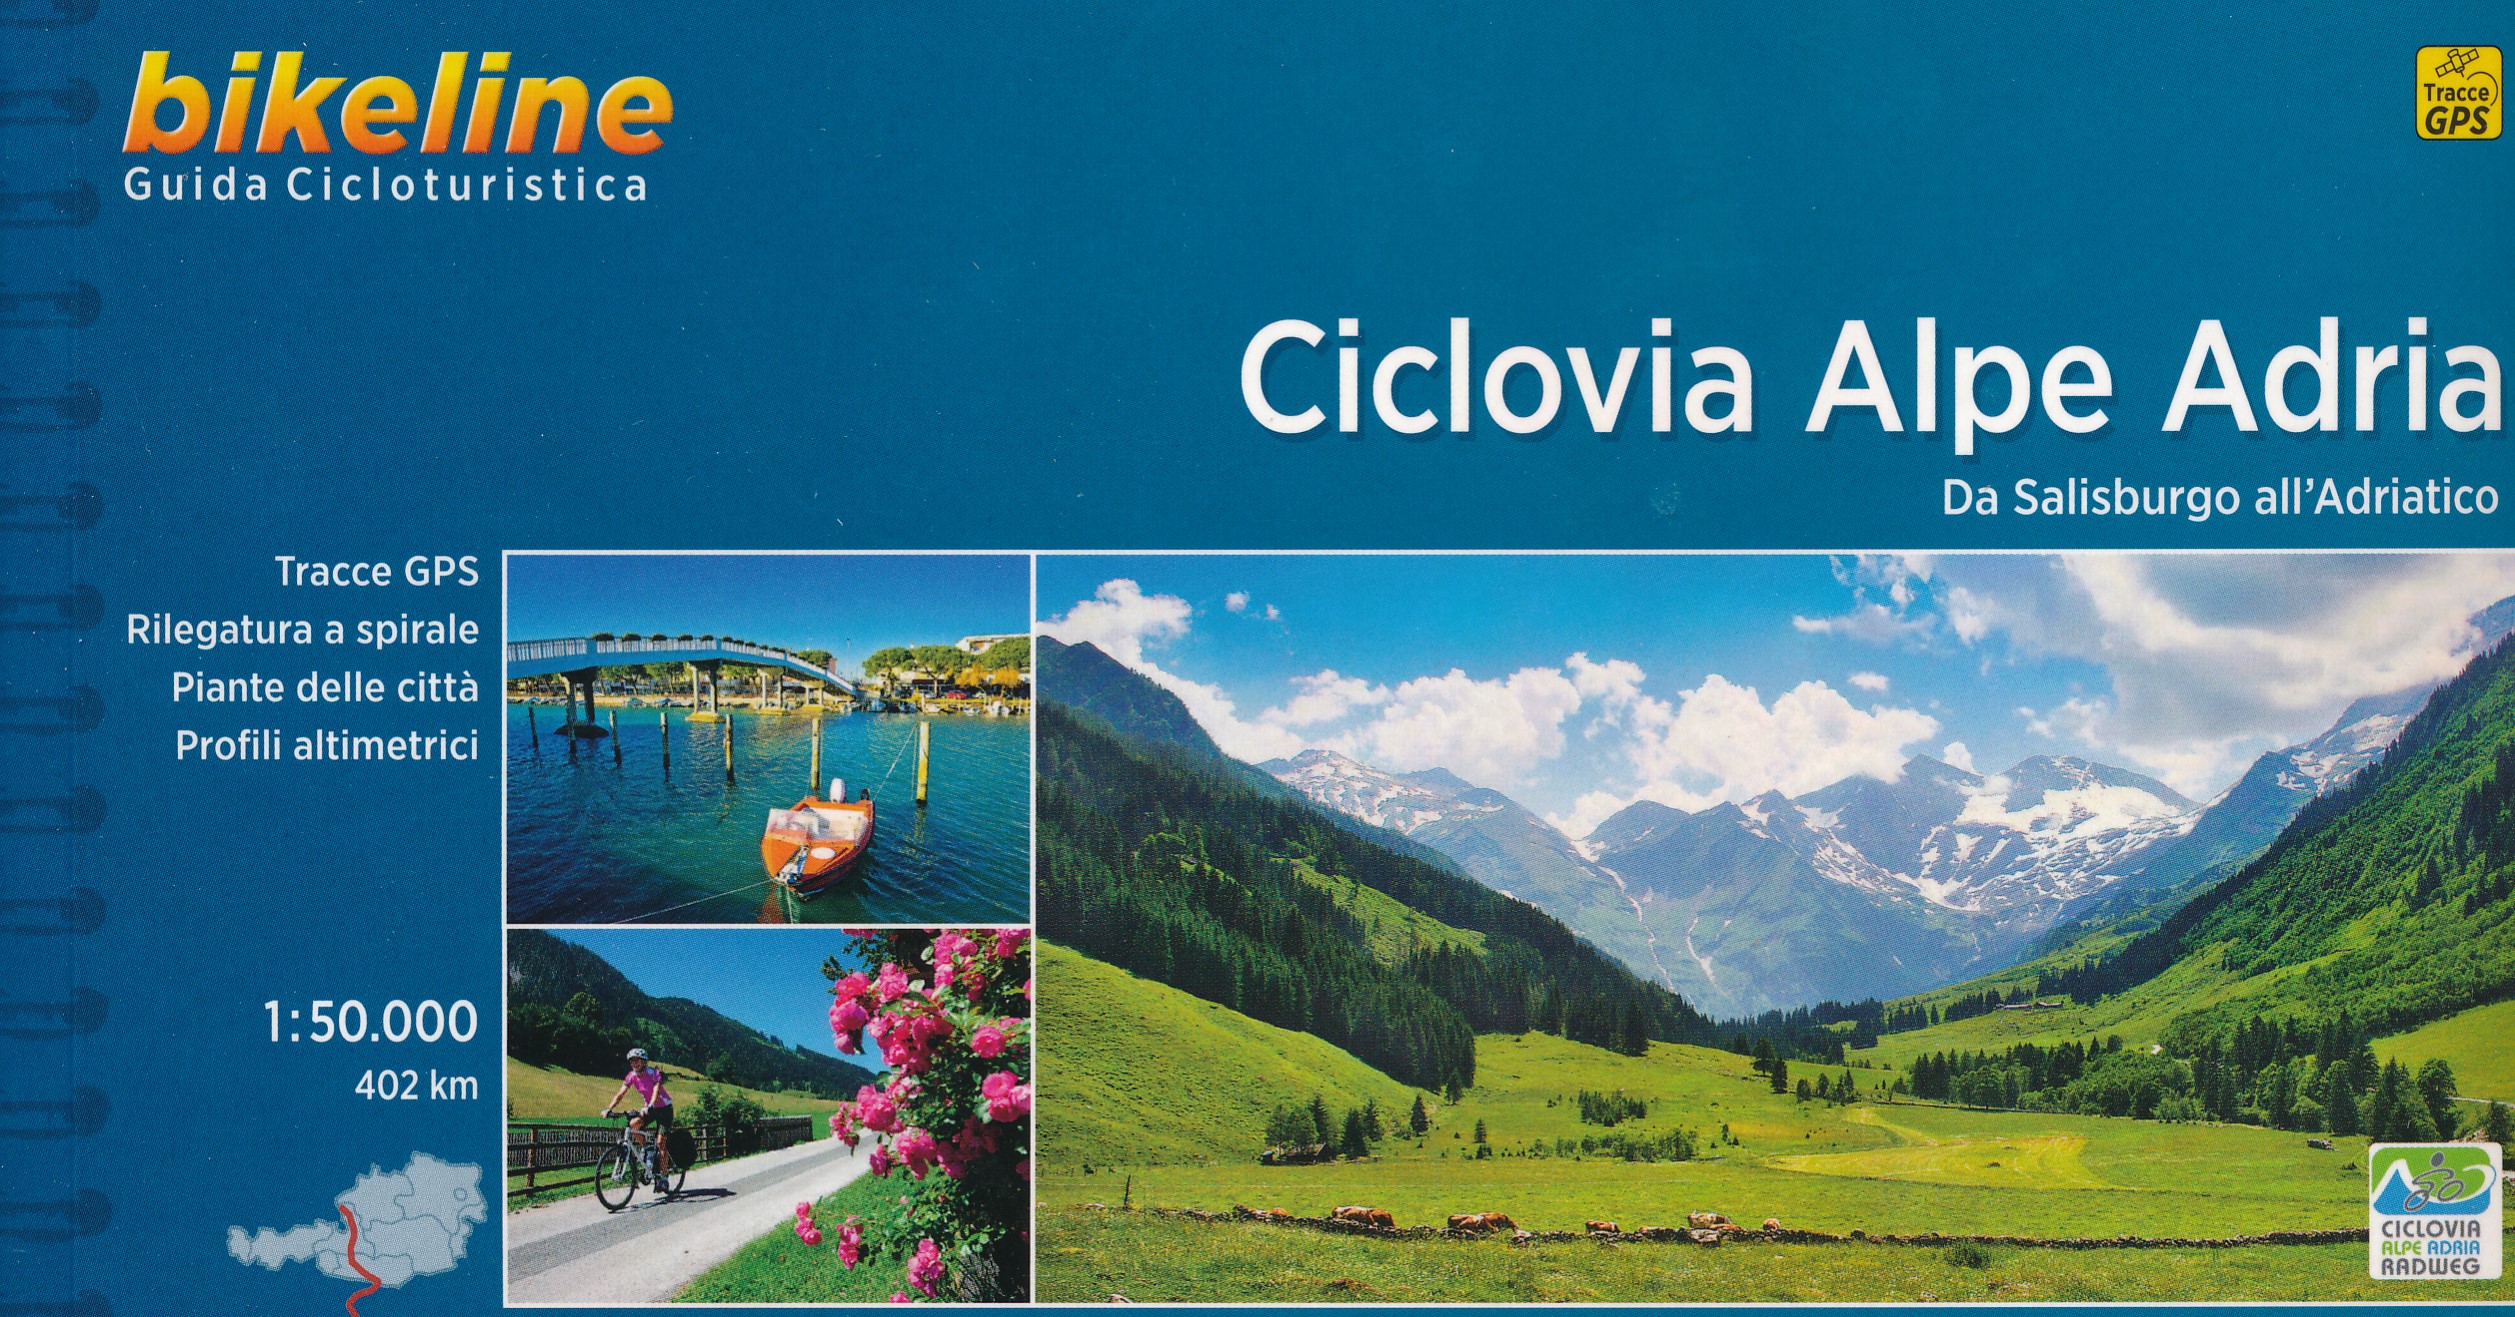 Online bestellen: Fietsgids Bikeline Ciclovia Alpe Adria | Esterbauer